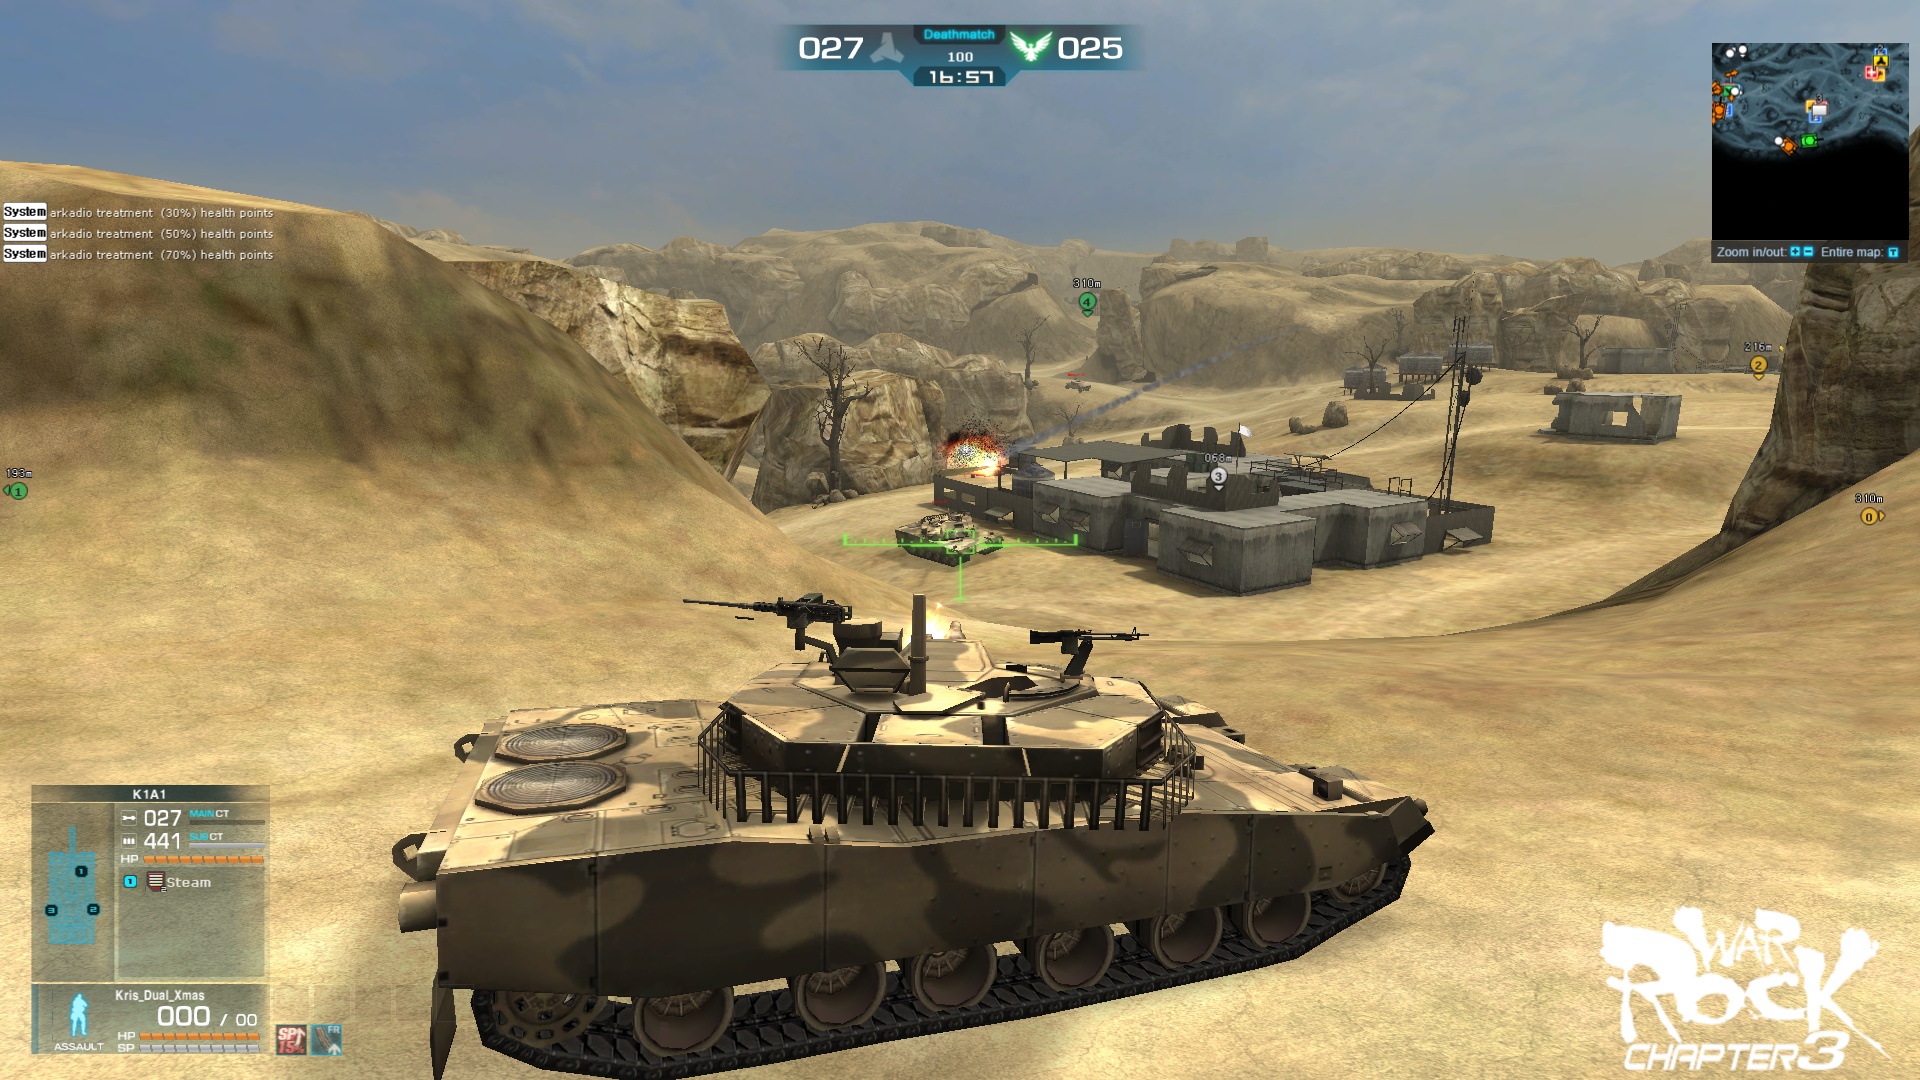 War Rock screenshot